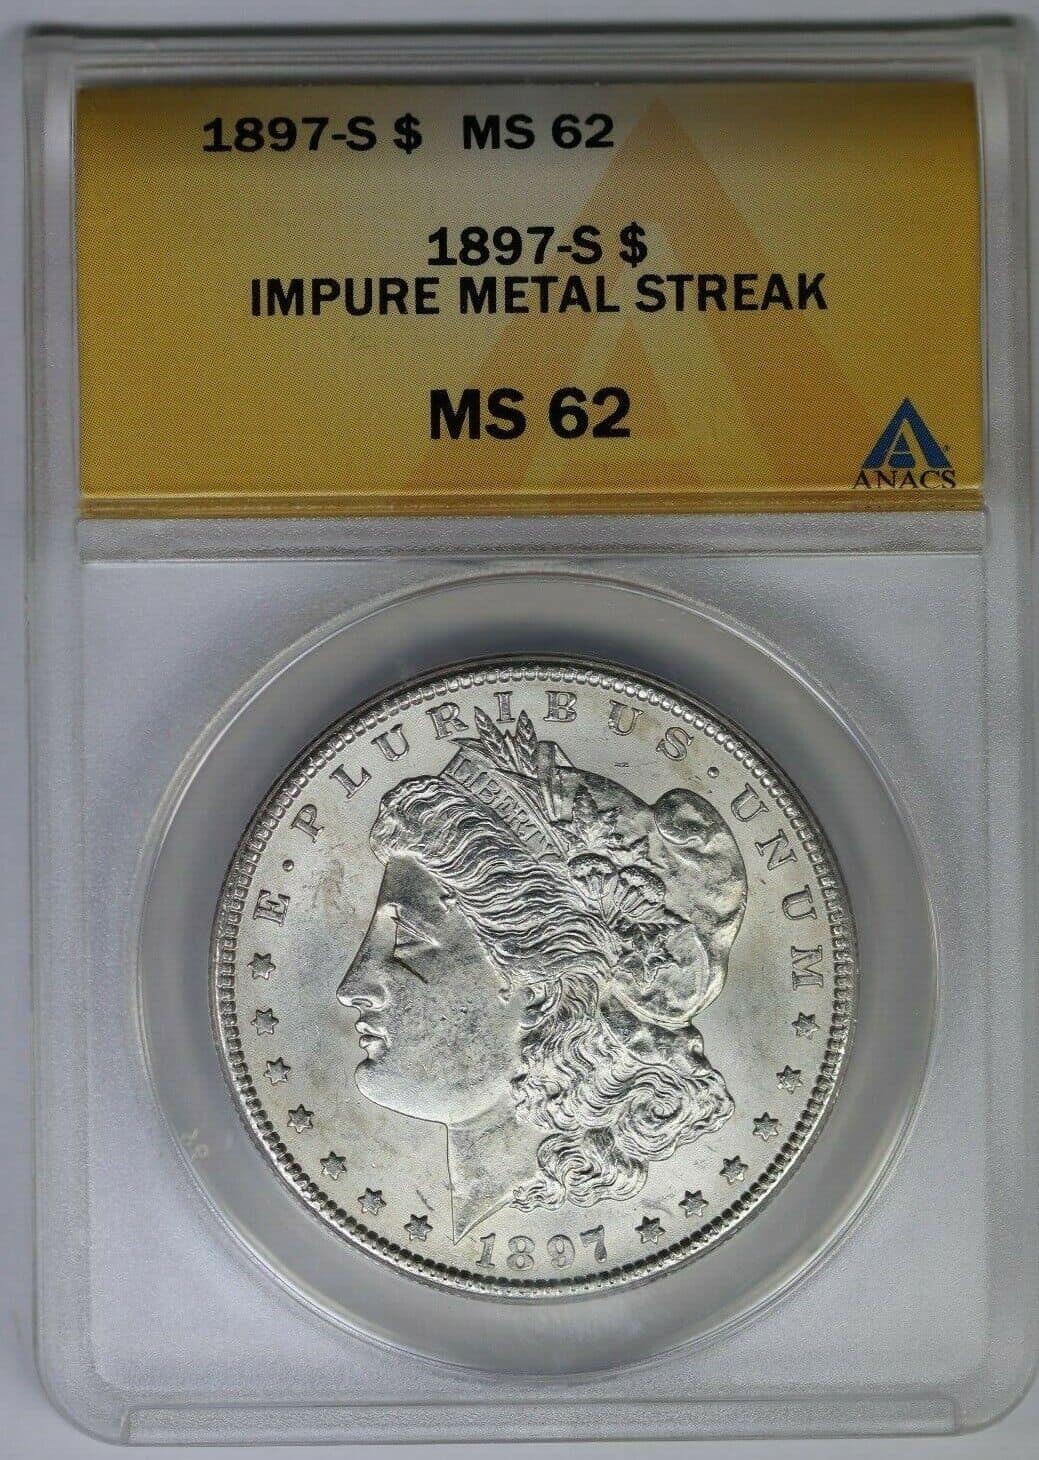 1897 Silver Dollar Impure Metal Streak Error